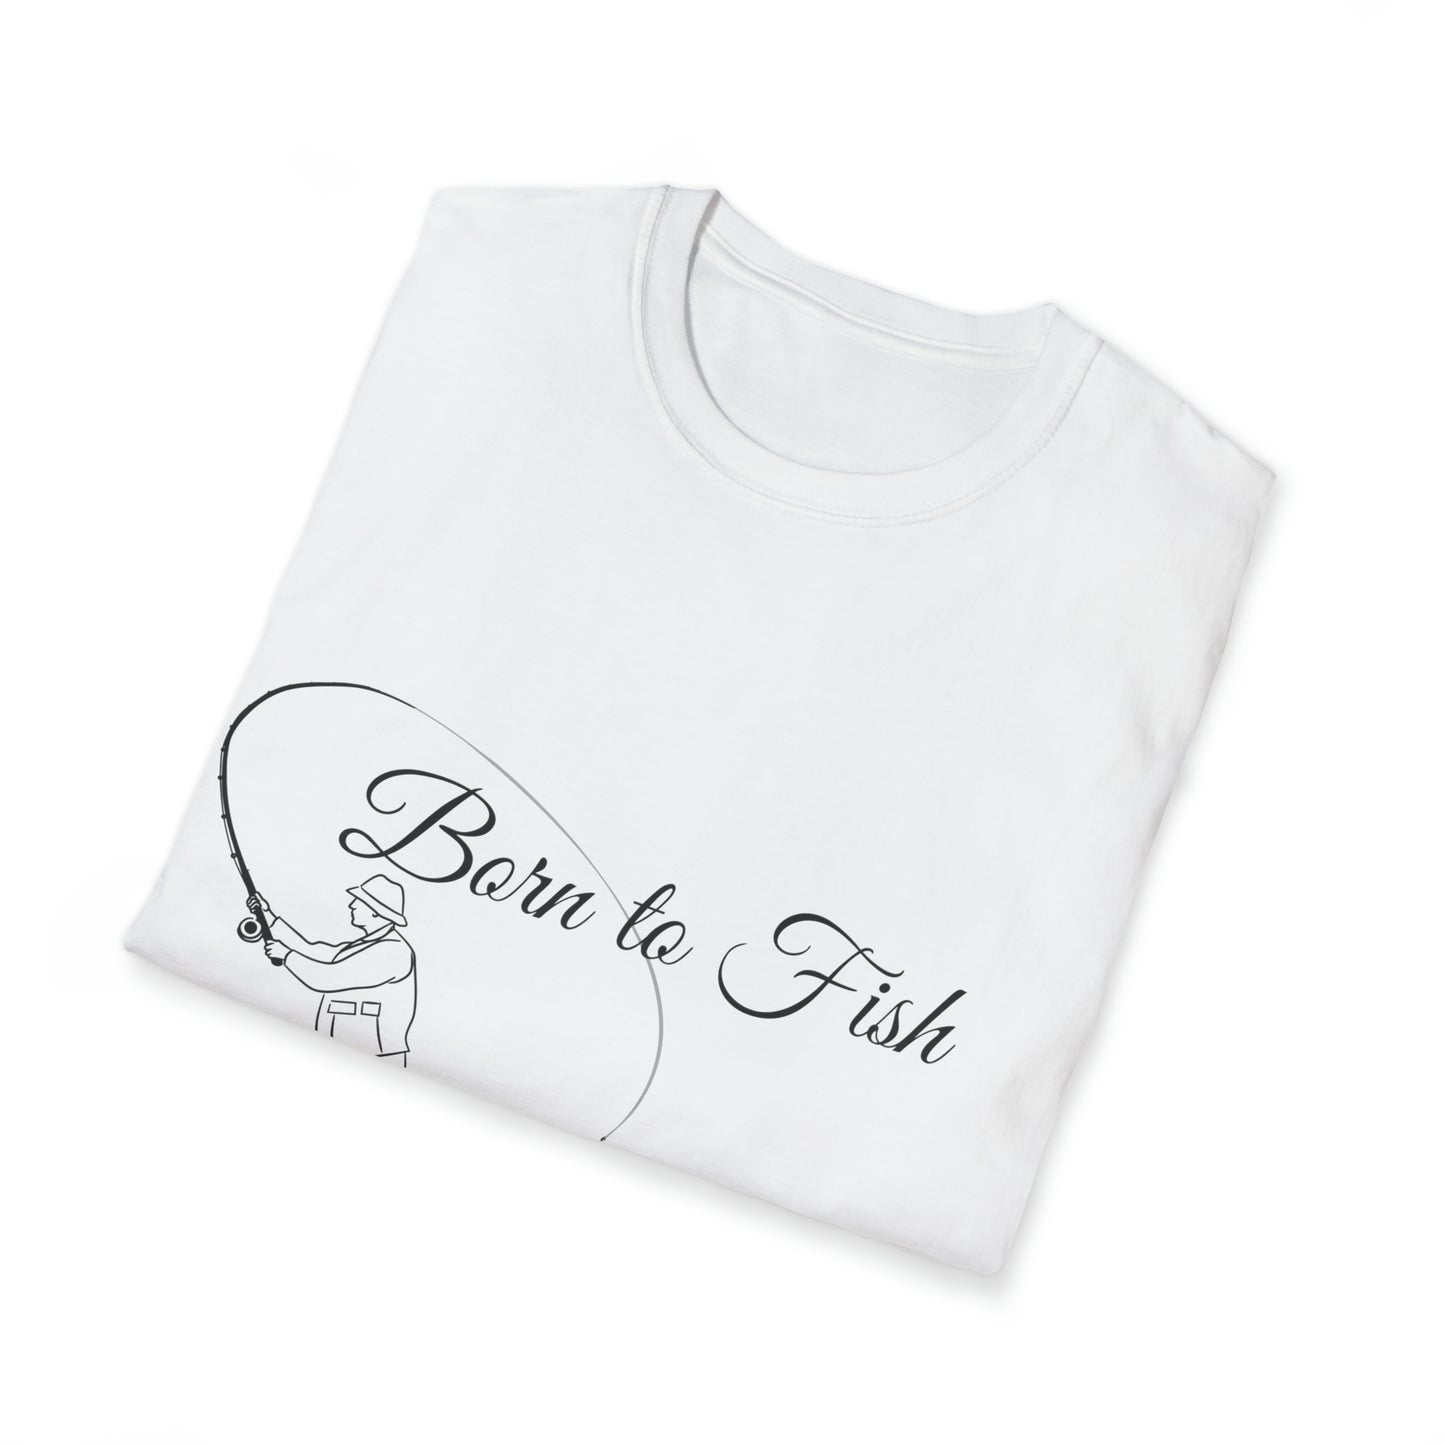 Born to Fish Unisex Soft-style T-Shirts. Rebel Fisherman Referrals